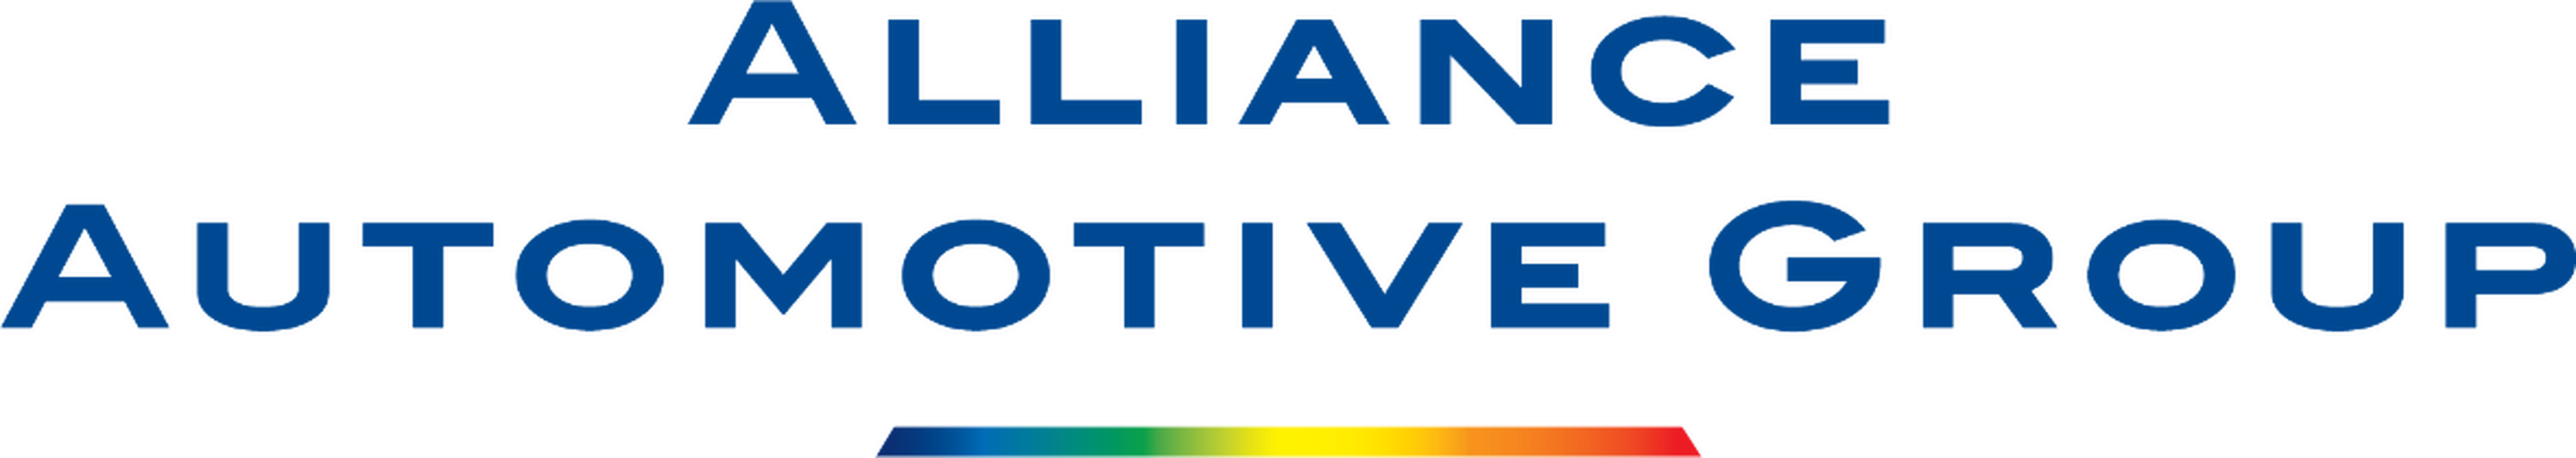 Alliance-Automotive-Logo-v1